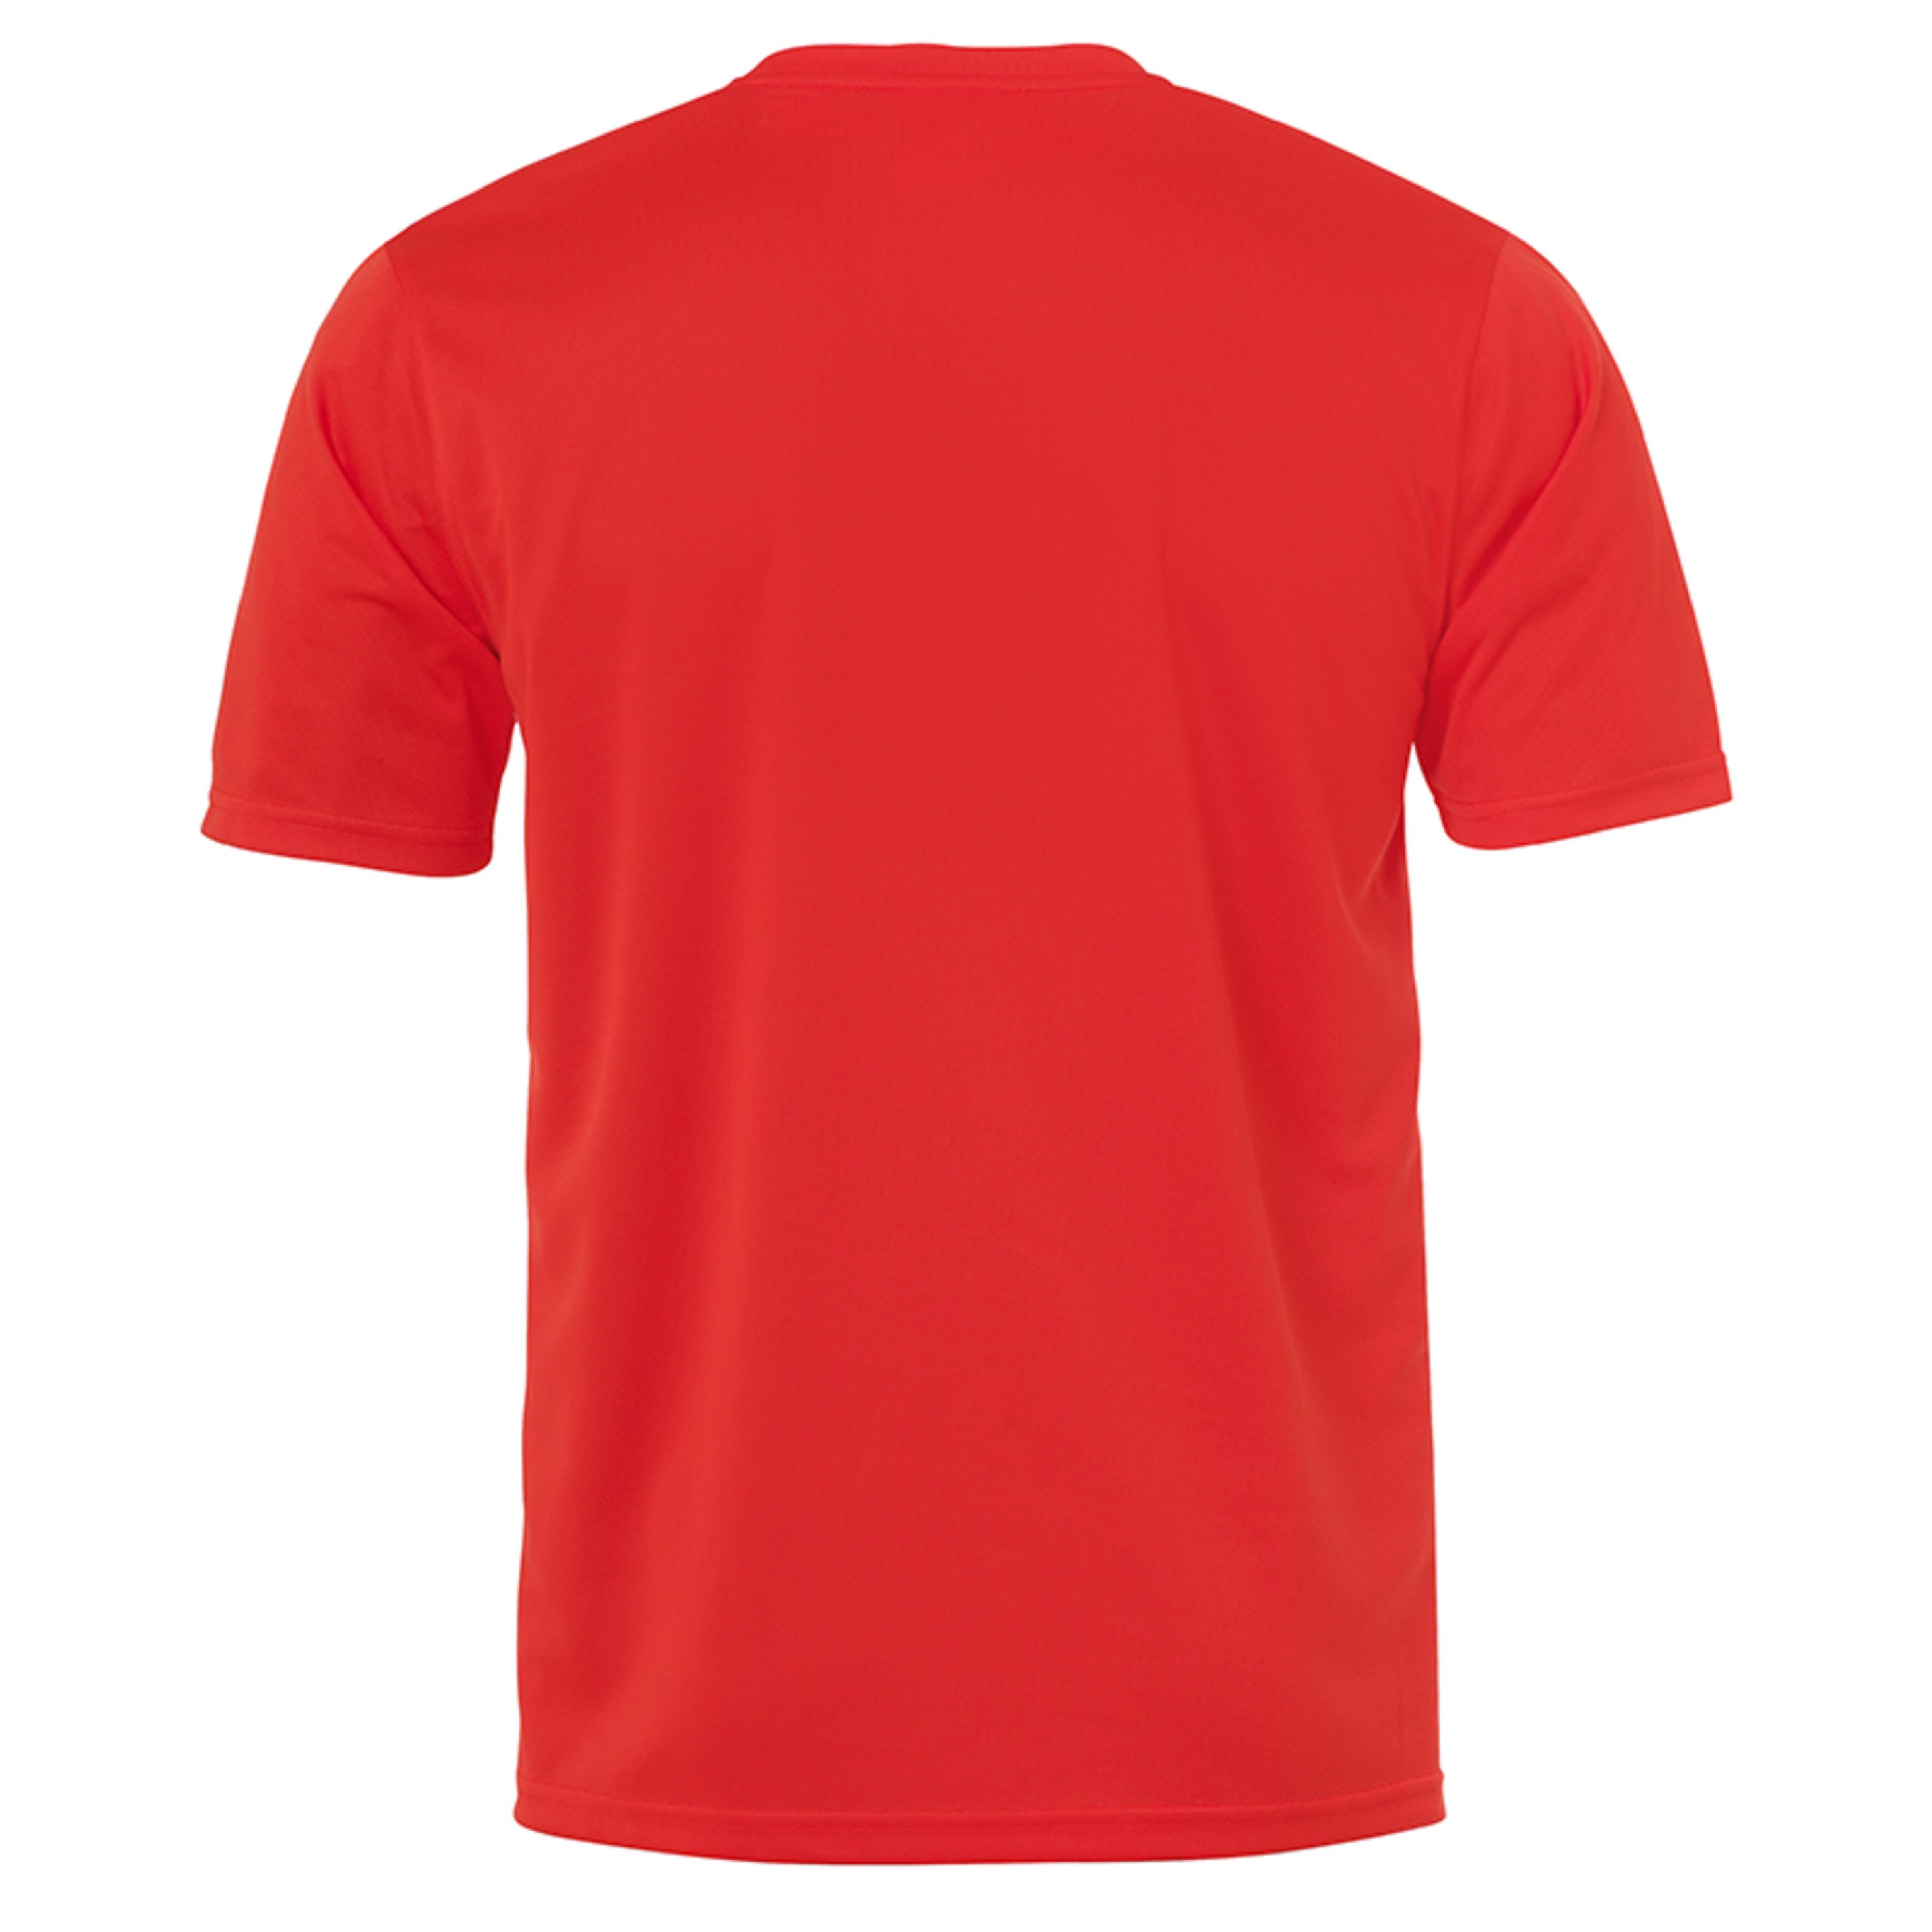 Goal Polyester Training T-shirt Rojo/burdeos Uhlsport